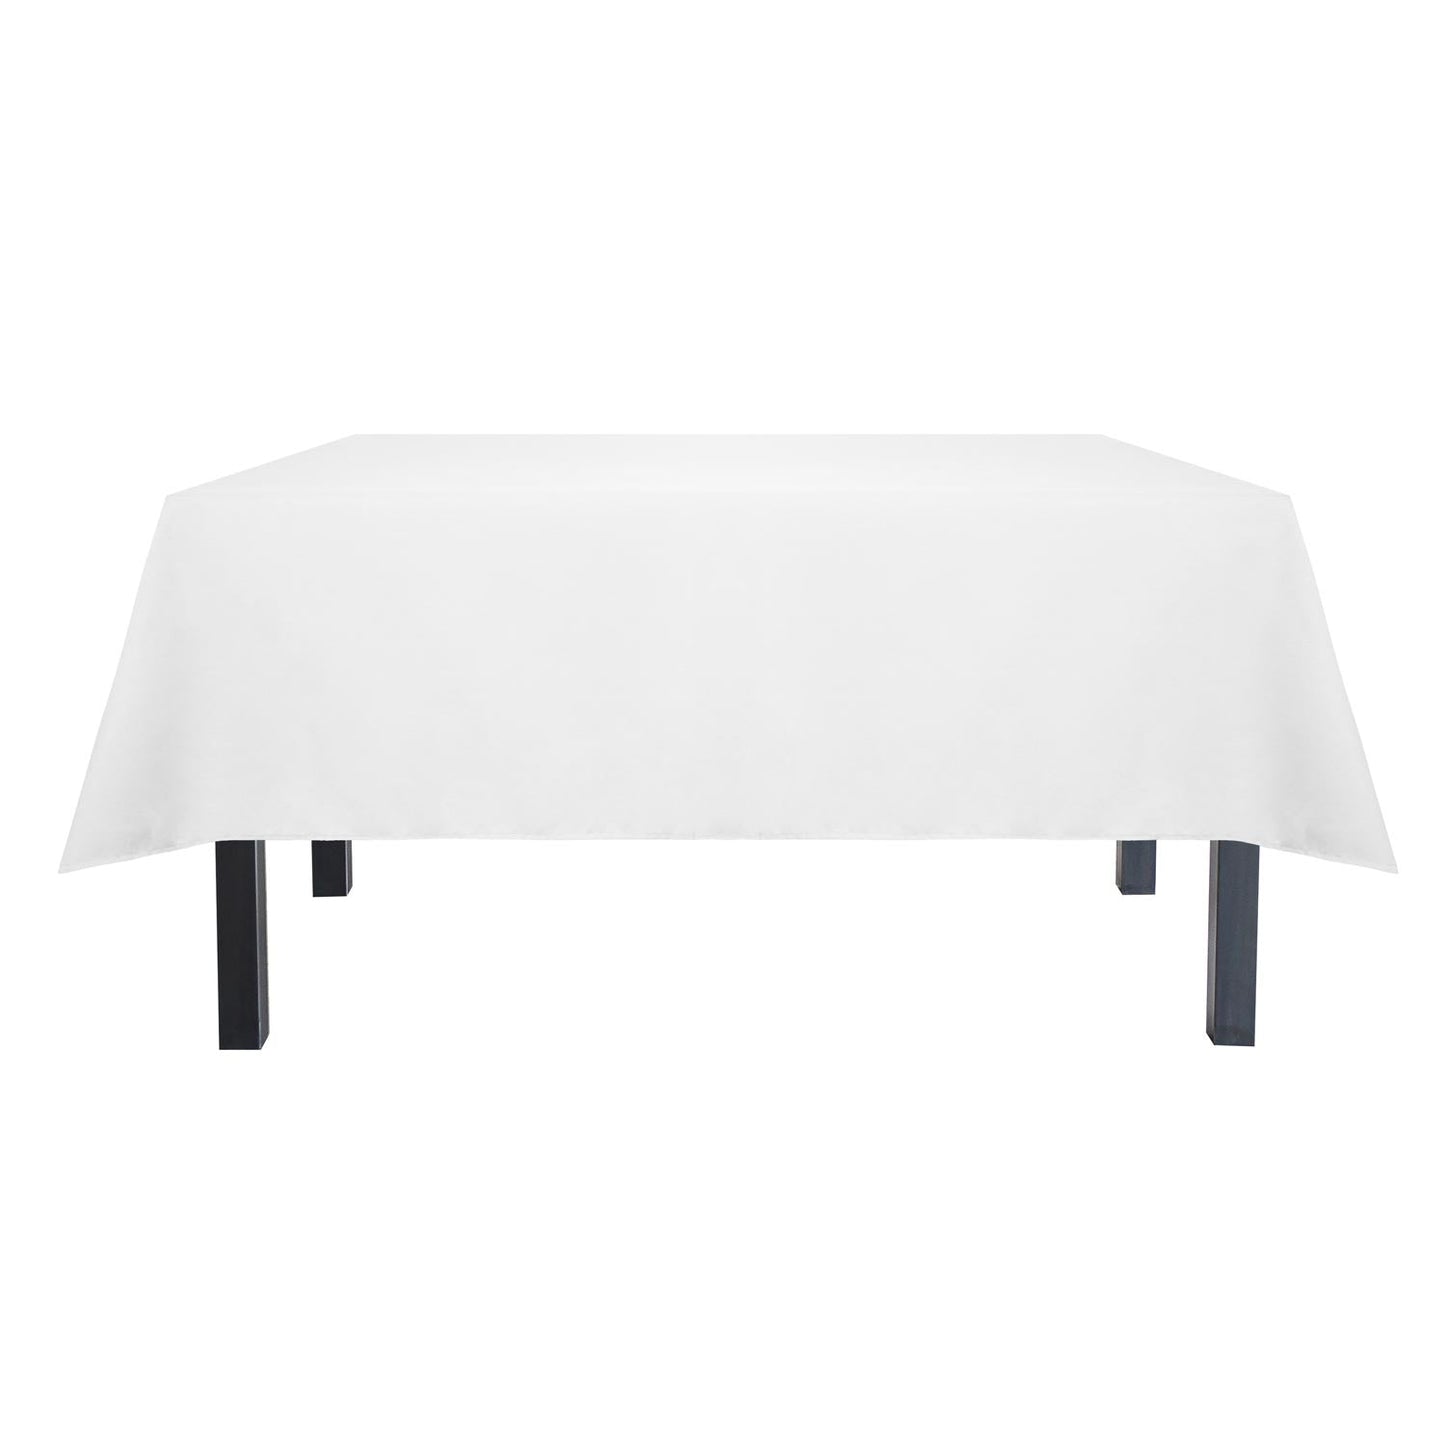 American Dawn | 52X96 Inch Milliken Signature White Tablecloth 